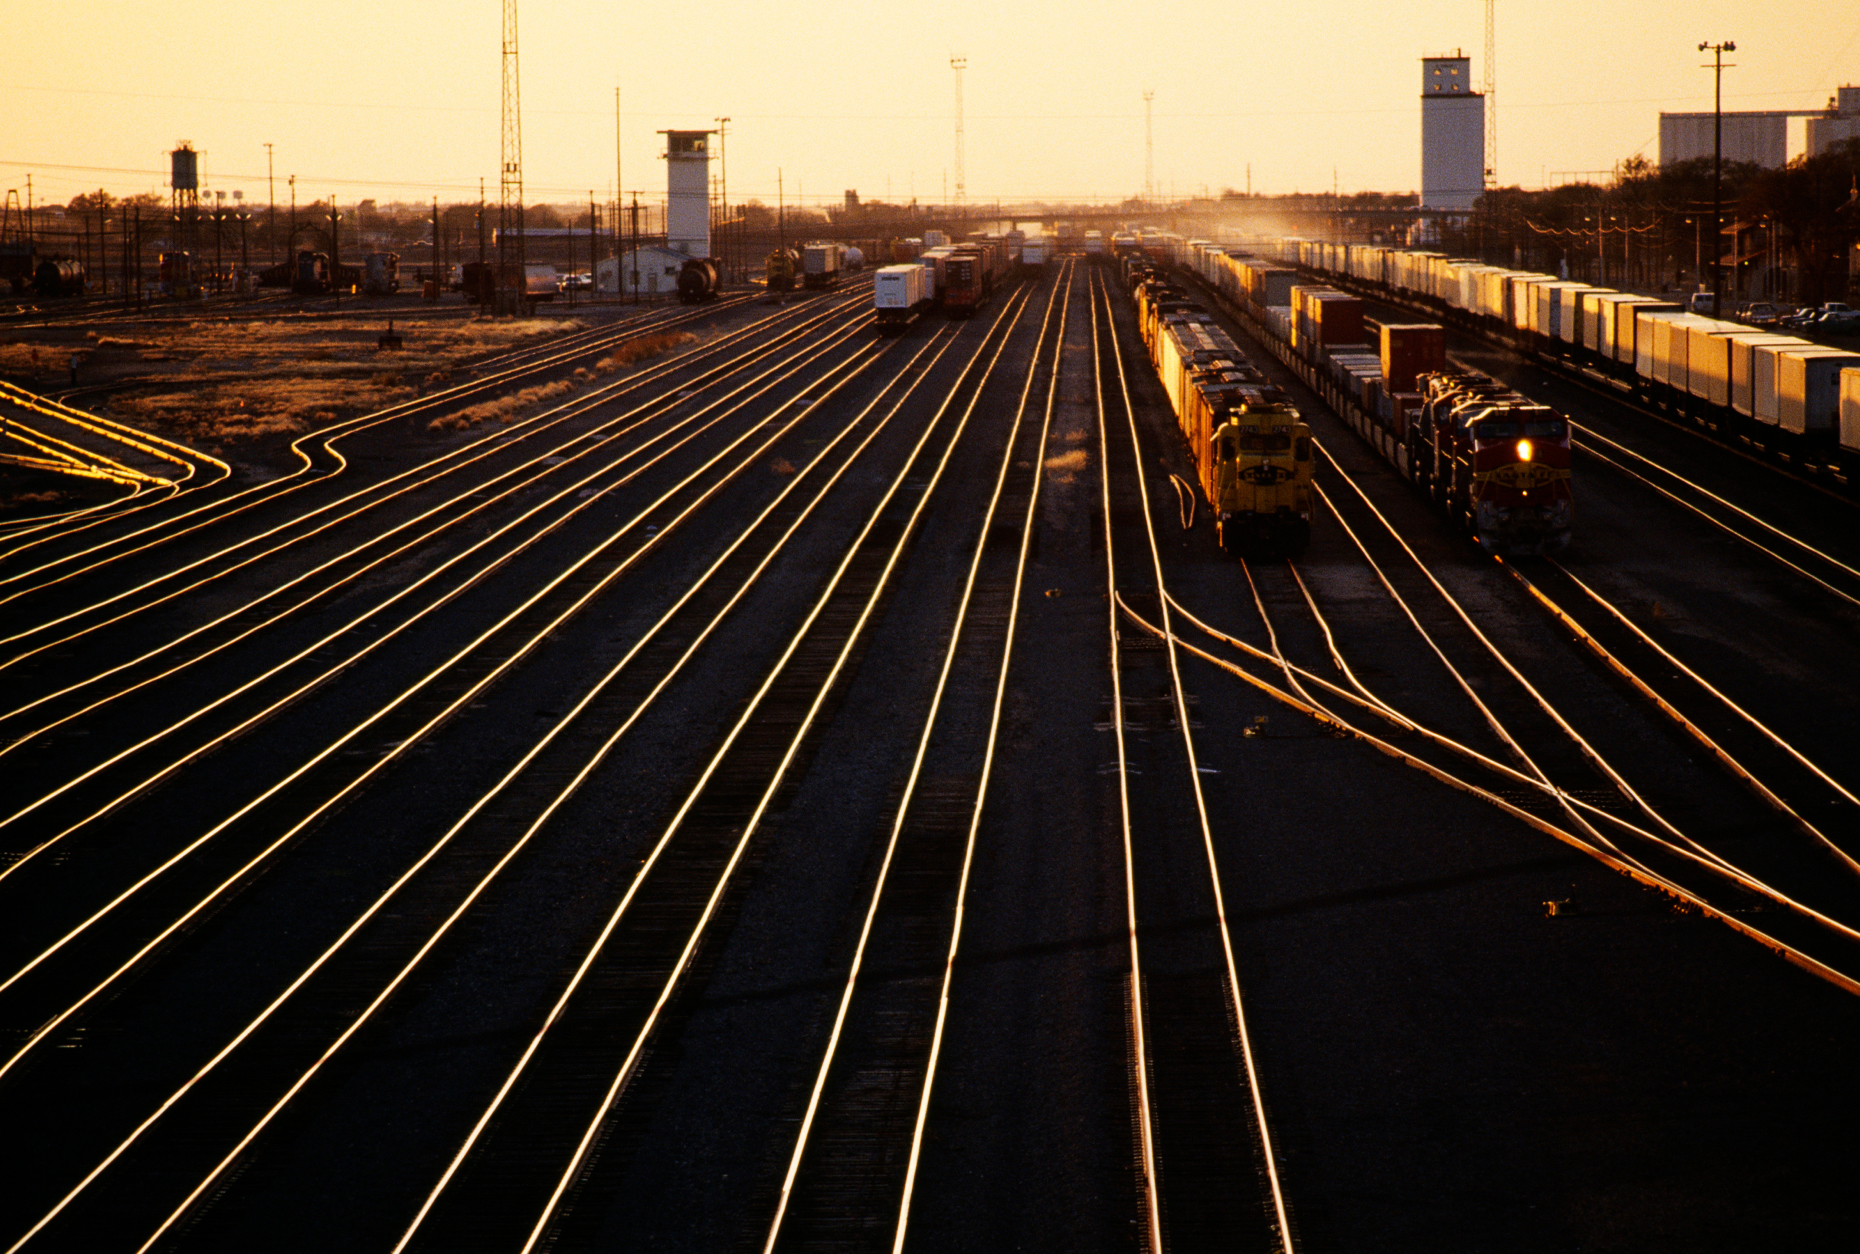 Setting sun reflecting off the rails in a train yard, Clovis, New Mexico, USA